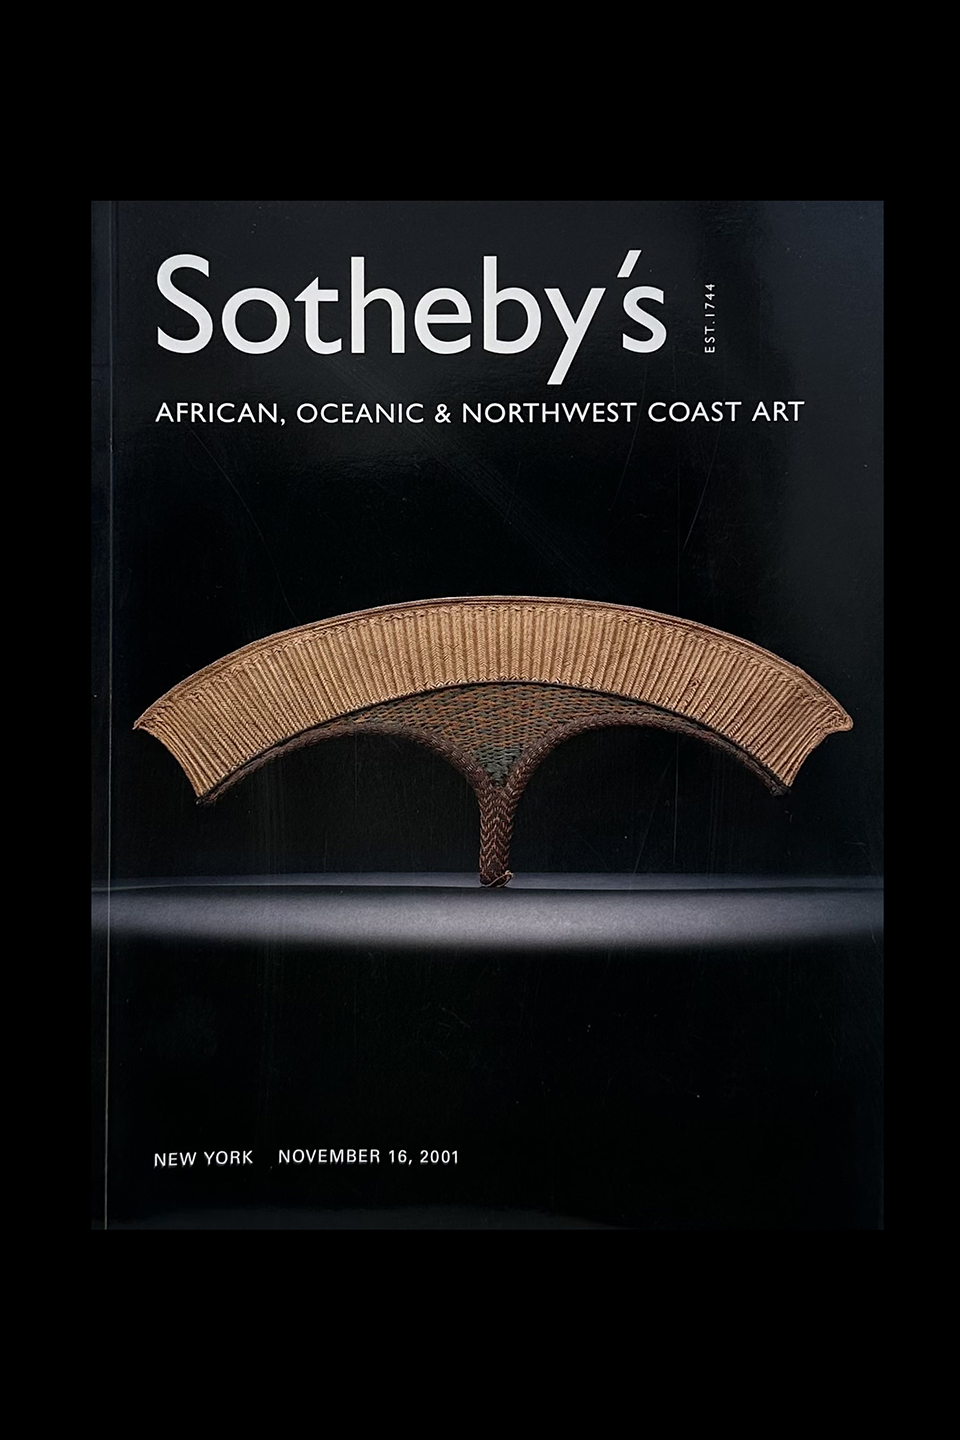  Sotheby's - African, Oceanic Art & Northwest Coast Art- New York, November, 2001